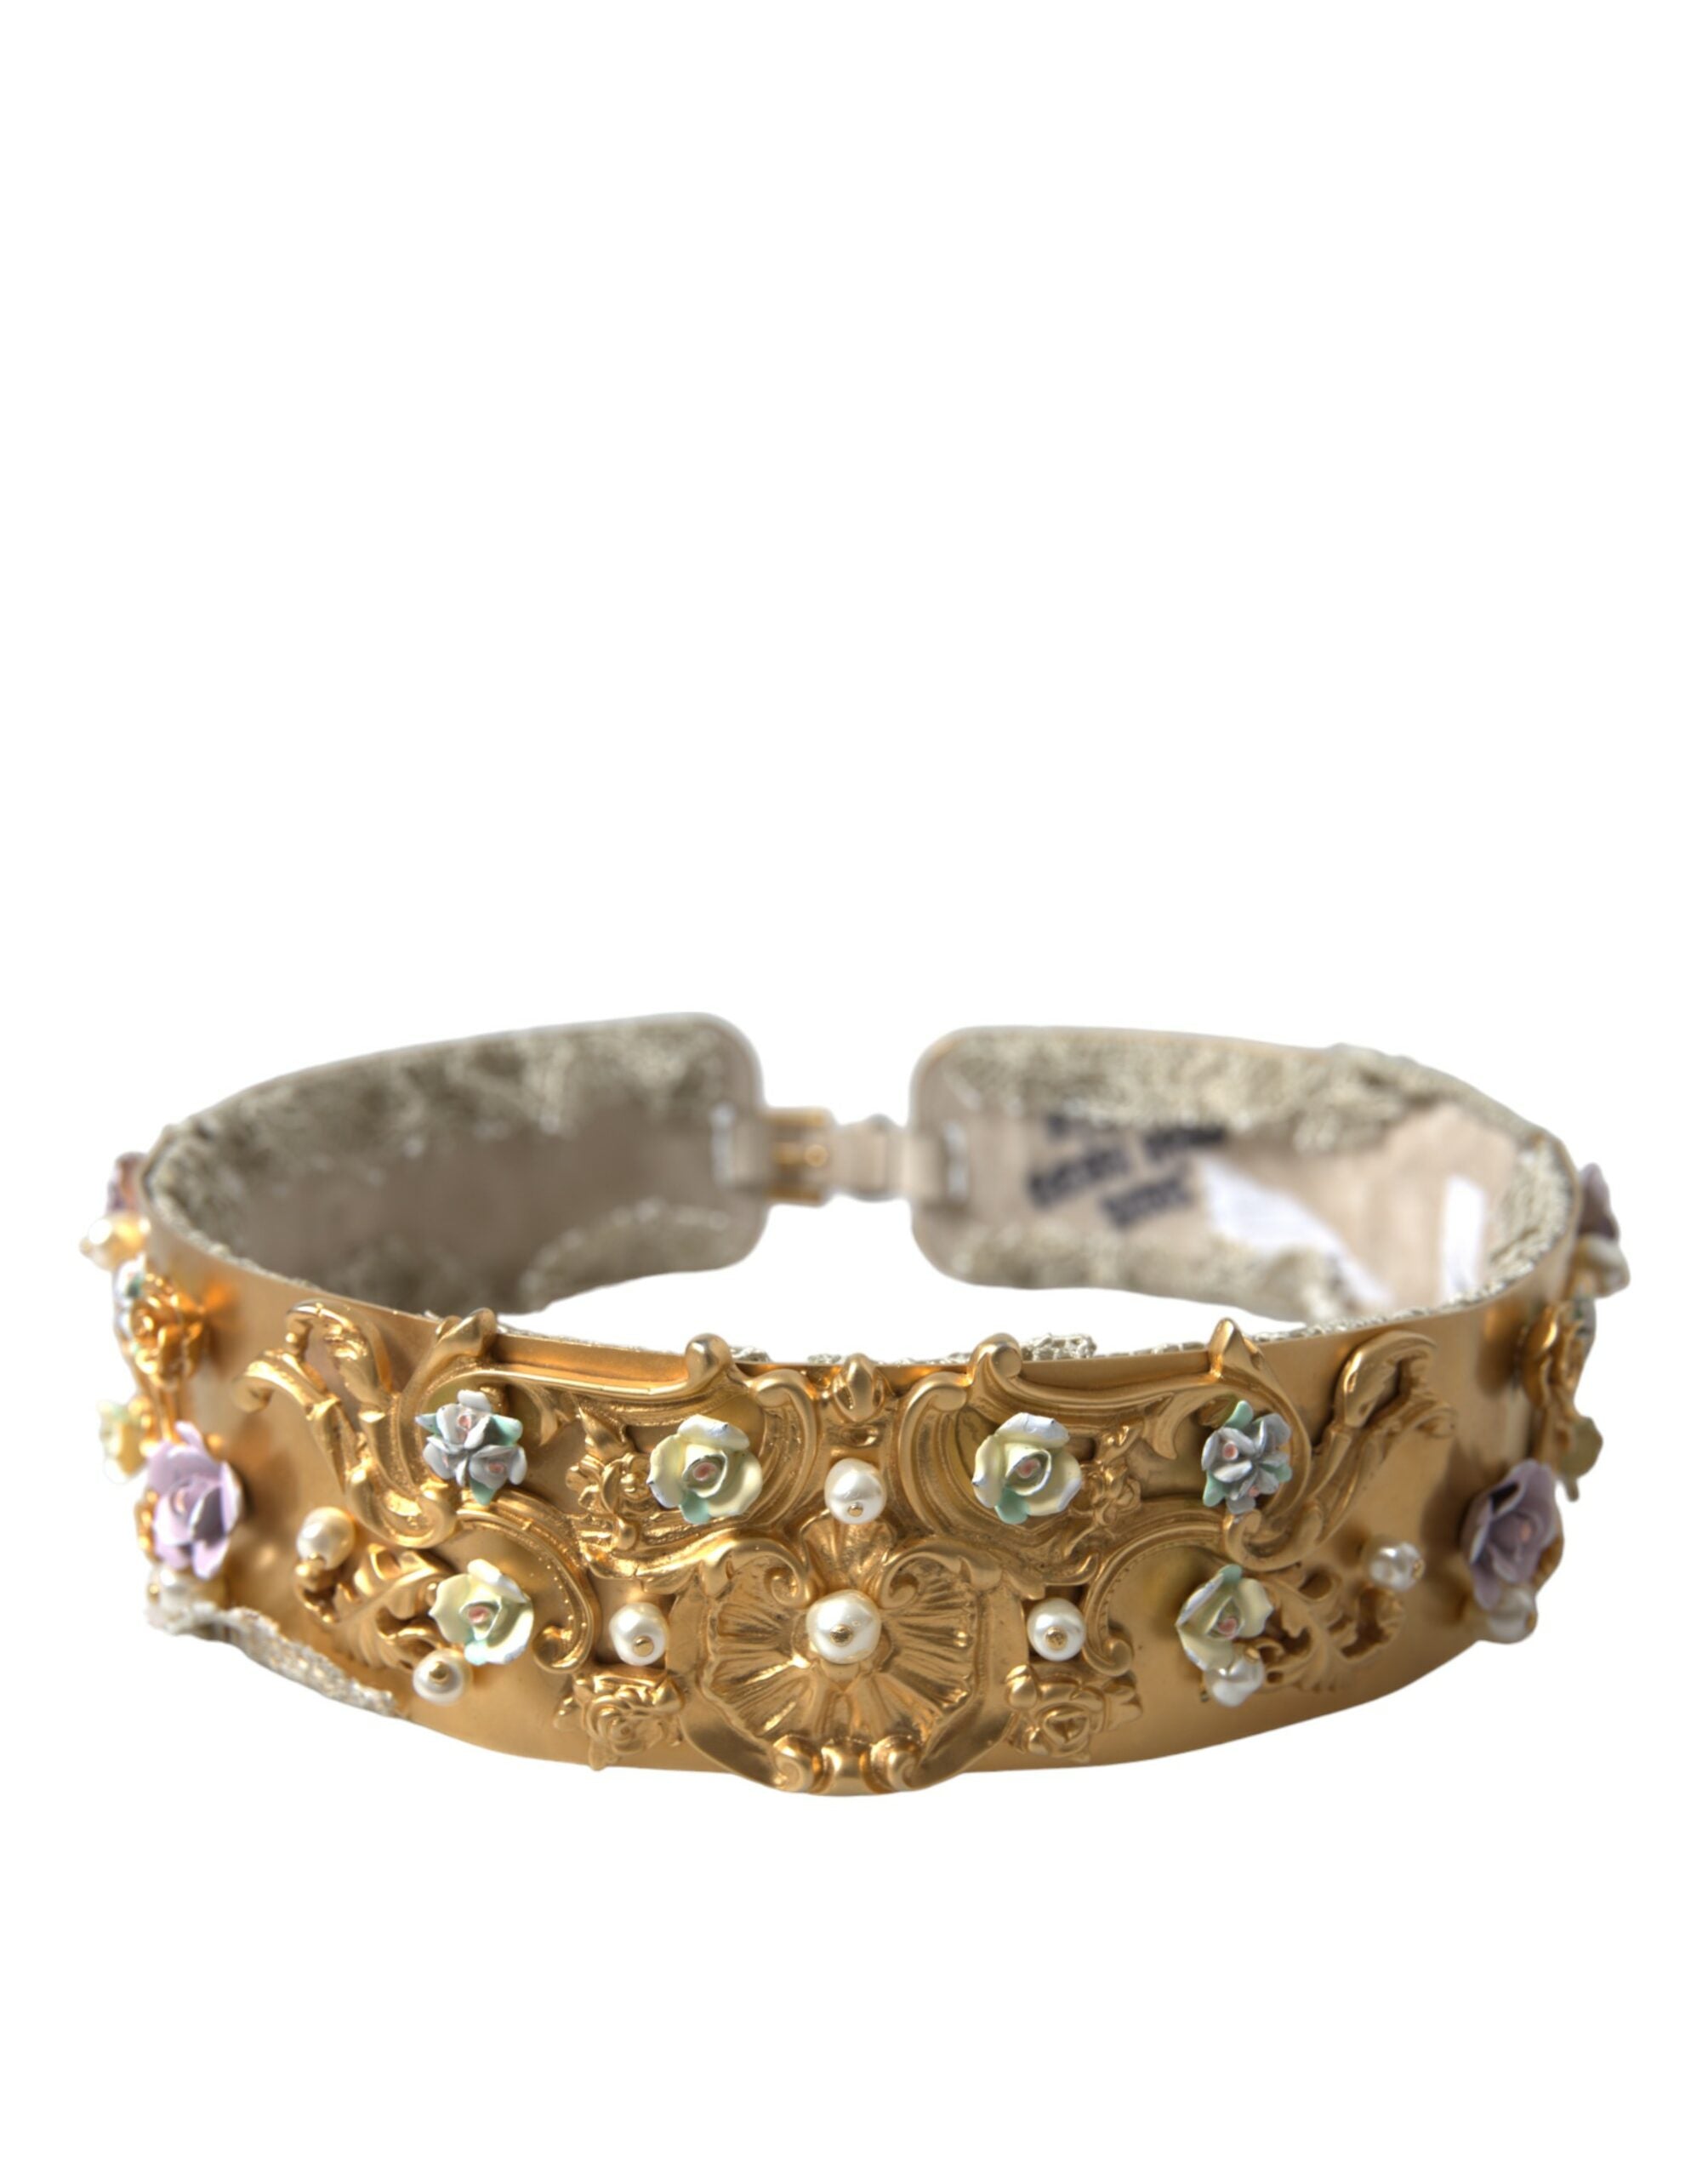 Dolce & Gabbana Elegant Gold-Tone Faux Pearl Floral Belt